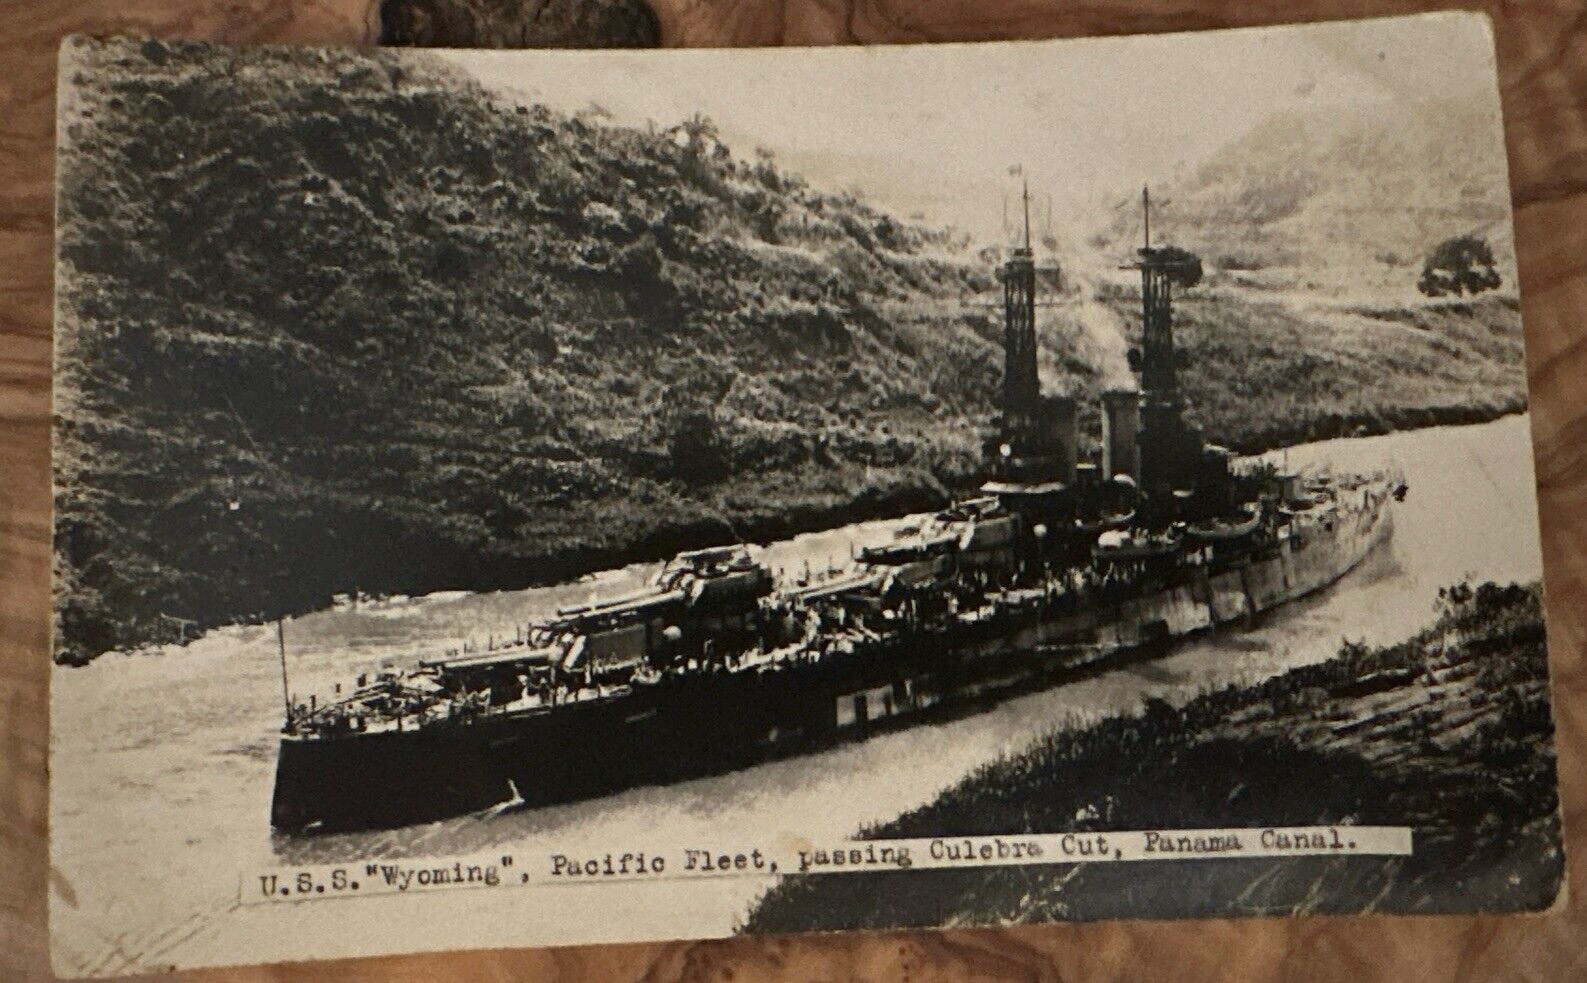 Antique Postcard U.S.S. “Wyoming”, Pacific Fleet Passing Culebra Panama Canal